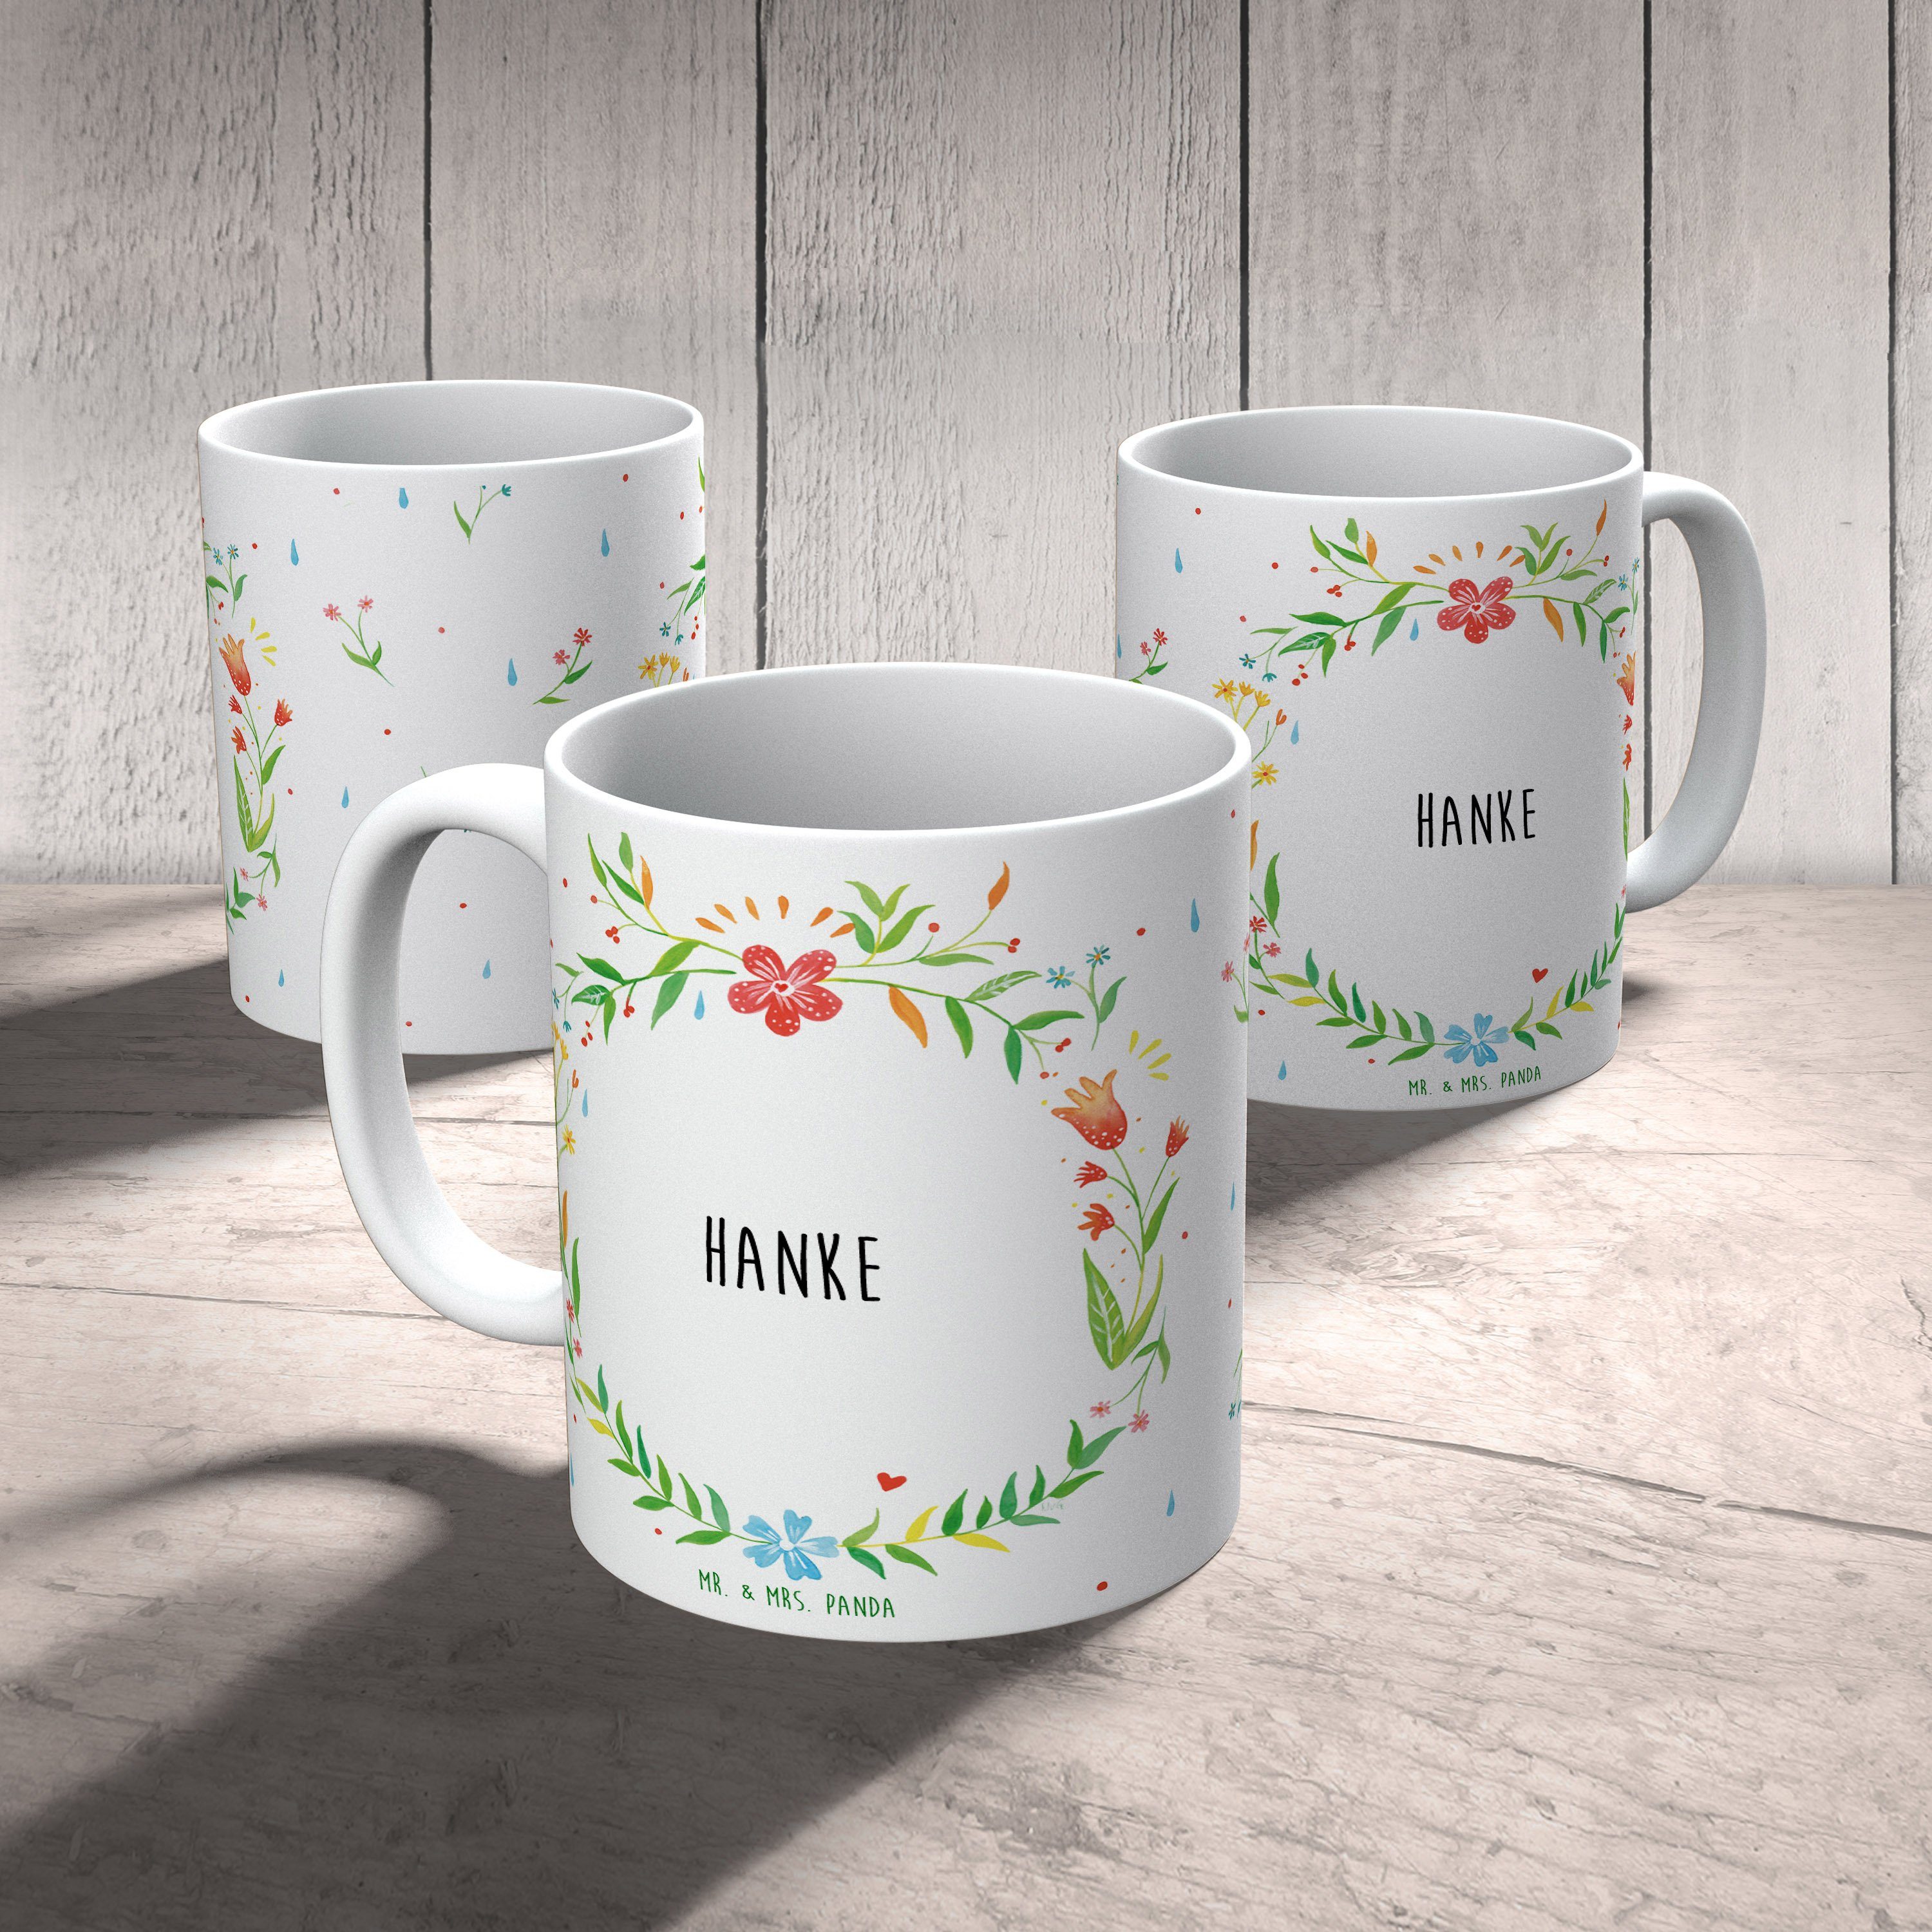 Moti, Geschenk, & - Panda Tasse, Hanke Tasse Geschenk Mrs. Mr. Tasse Keramik Büro Tasse, Kaffeetasse,